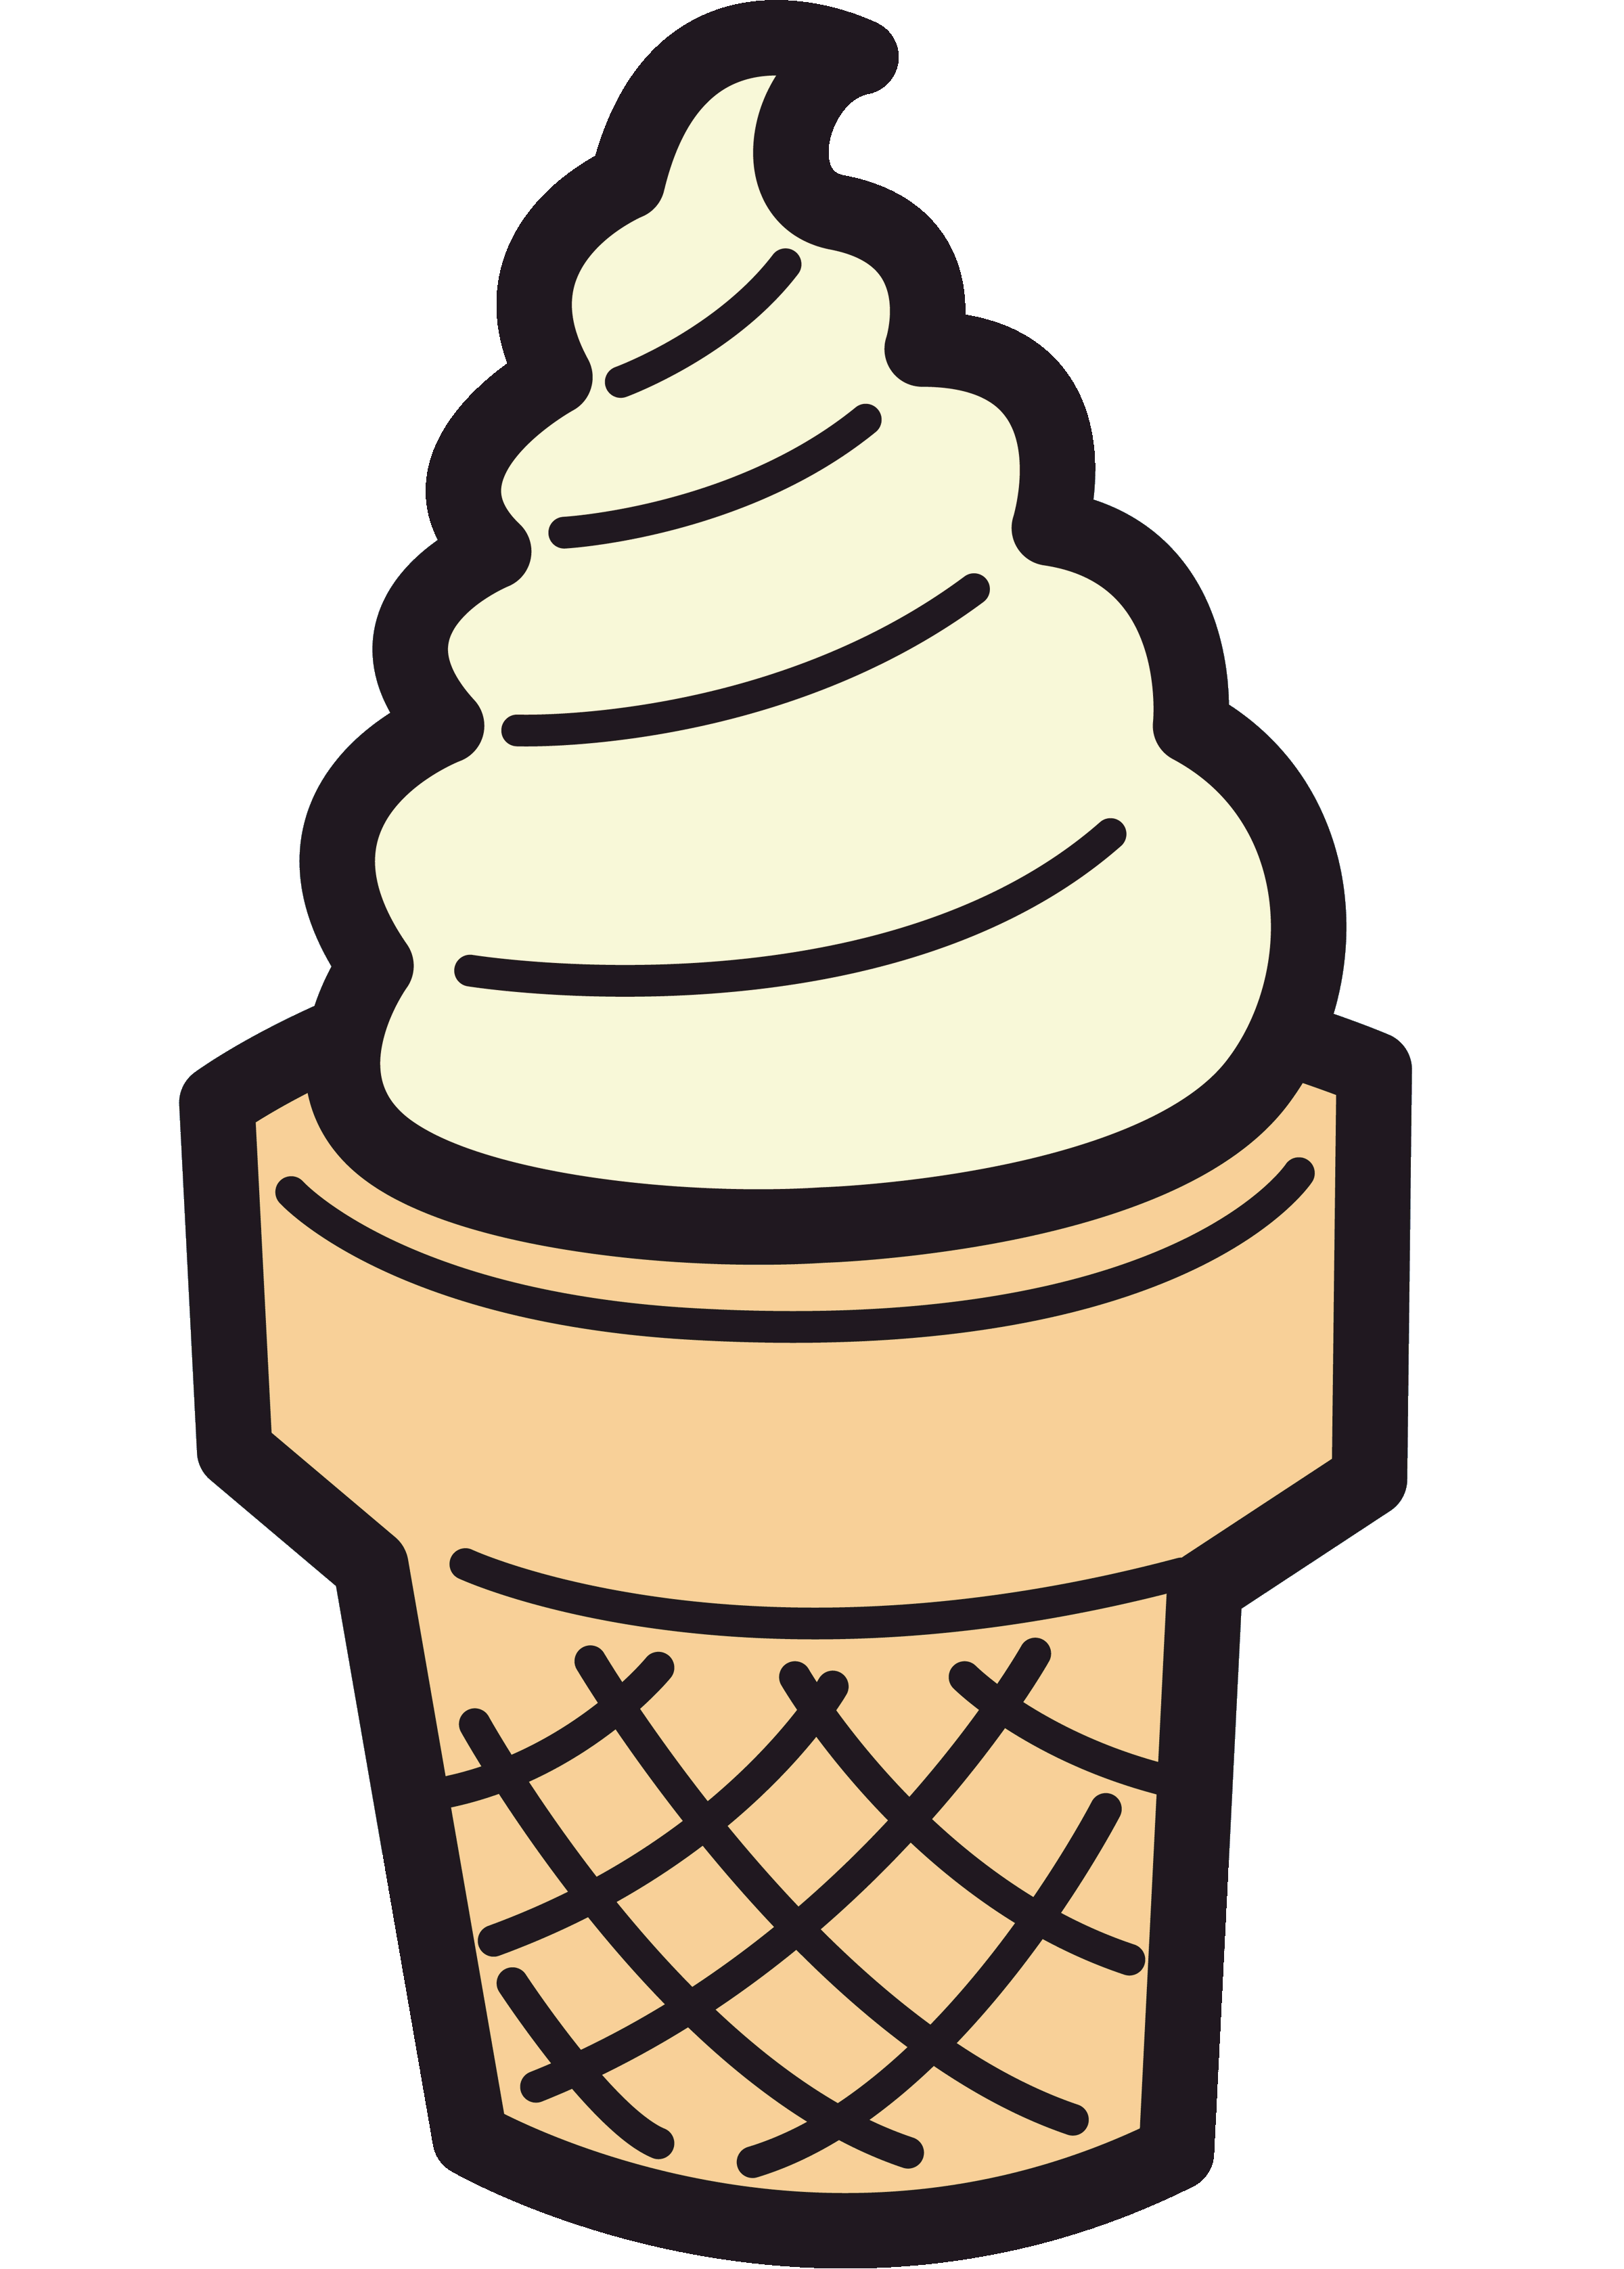 Ice Cream Cone Clipart - Free Clipart Images